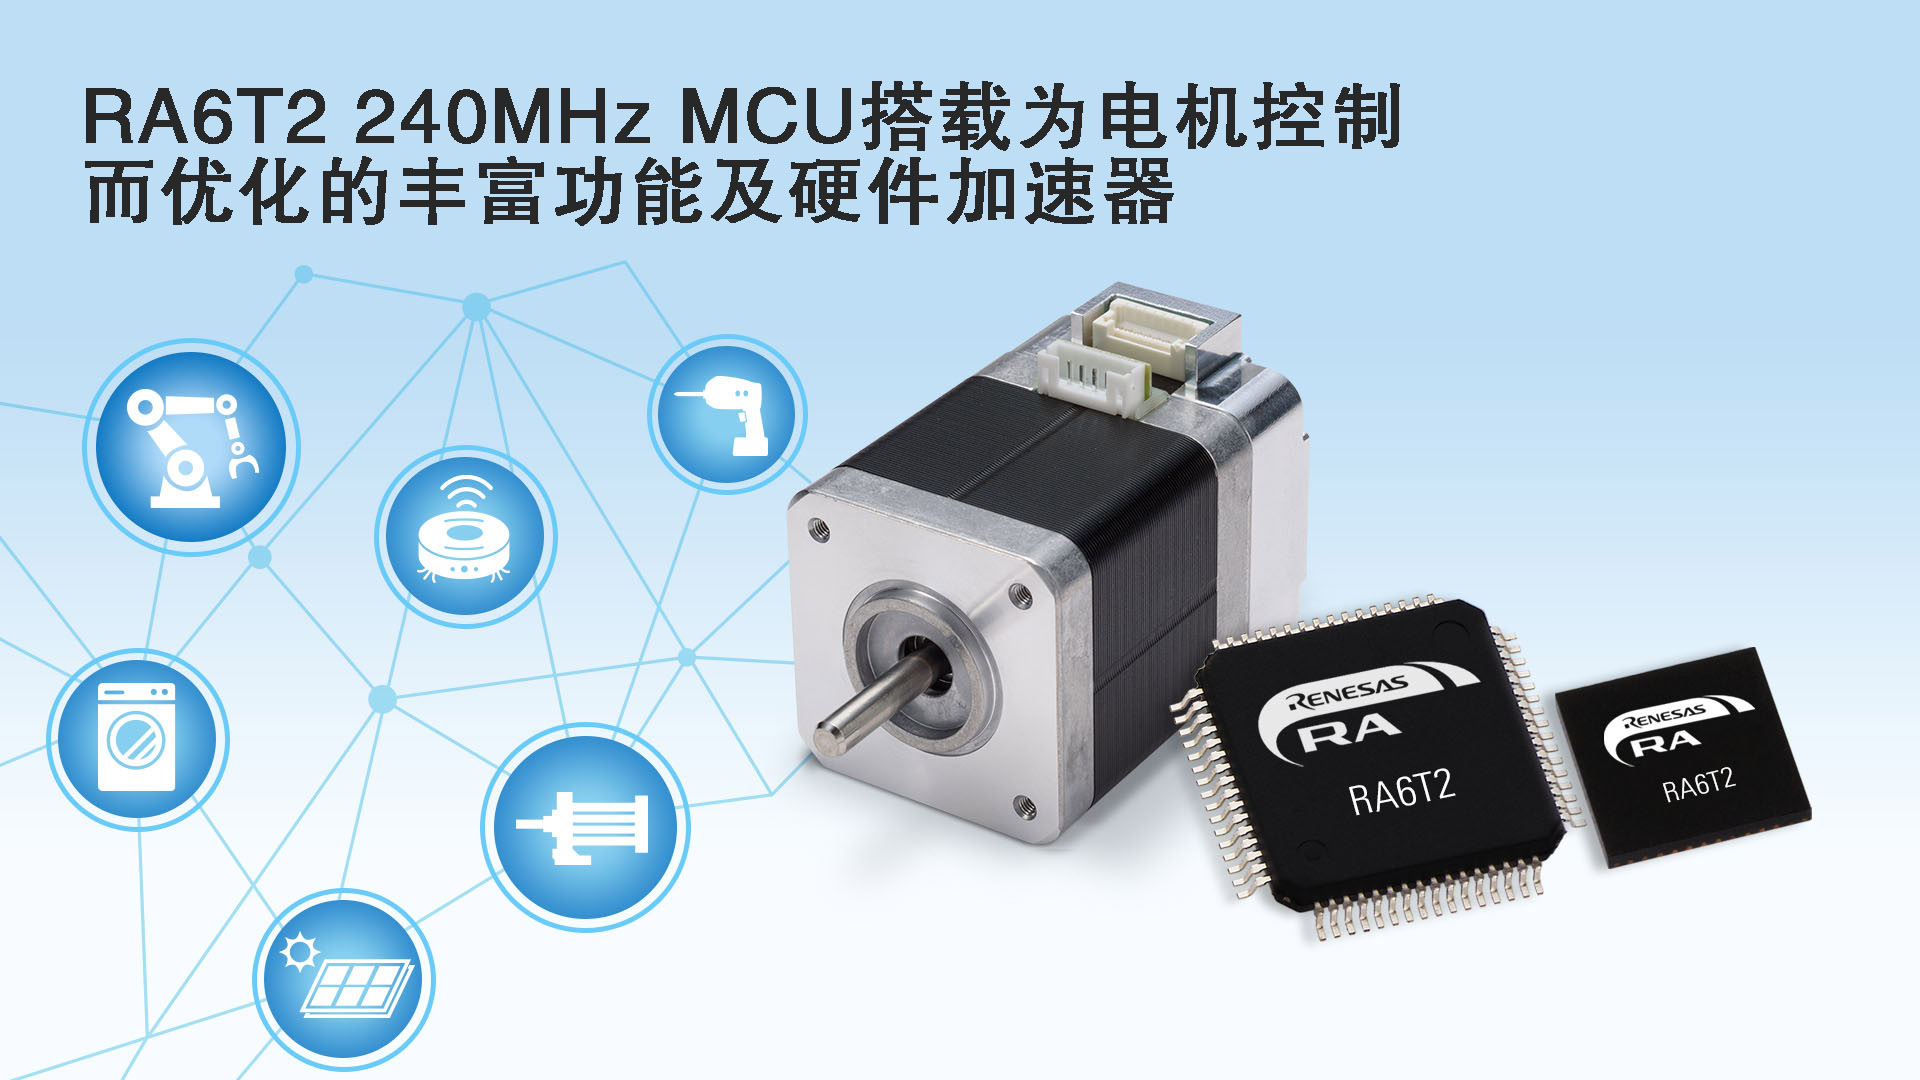 RA6T2 240MHz MCU搭载为电机控制而优化的丰富功能及硬件加速器